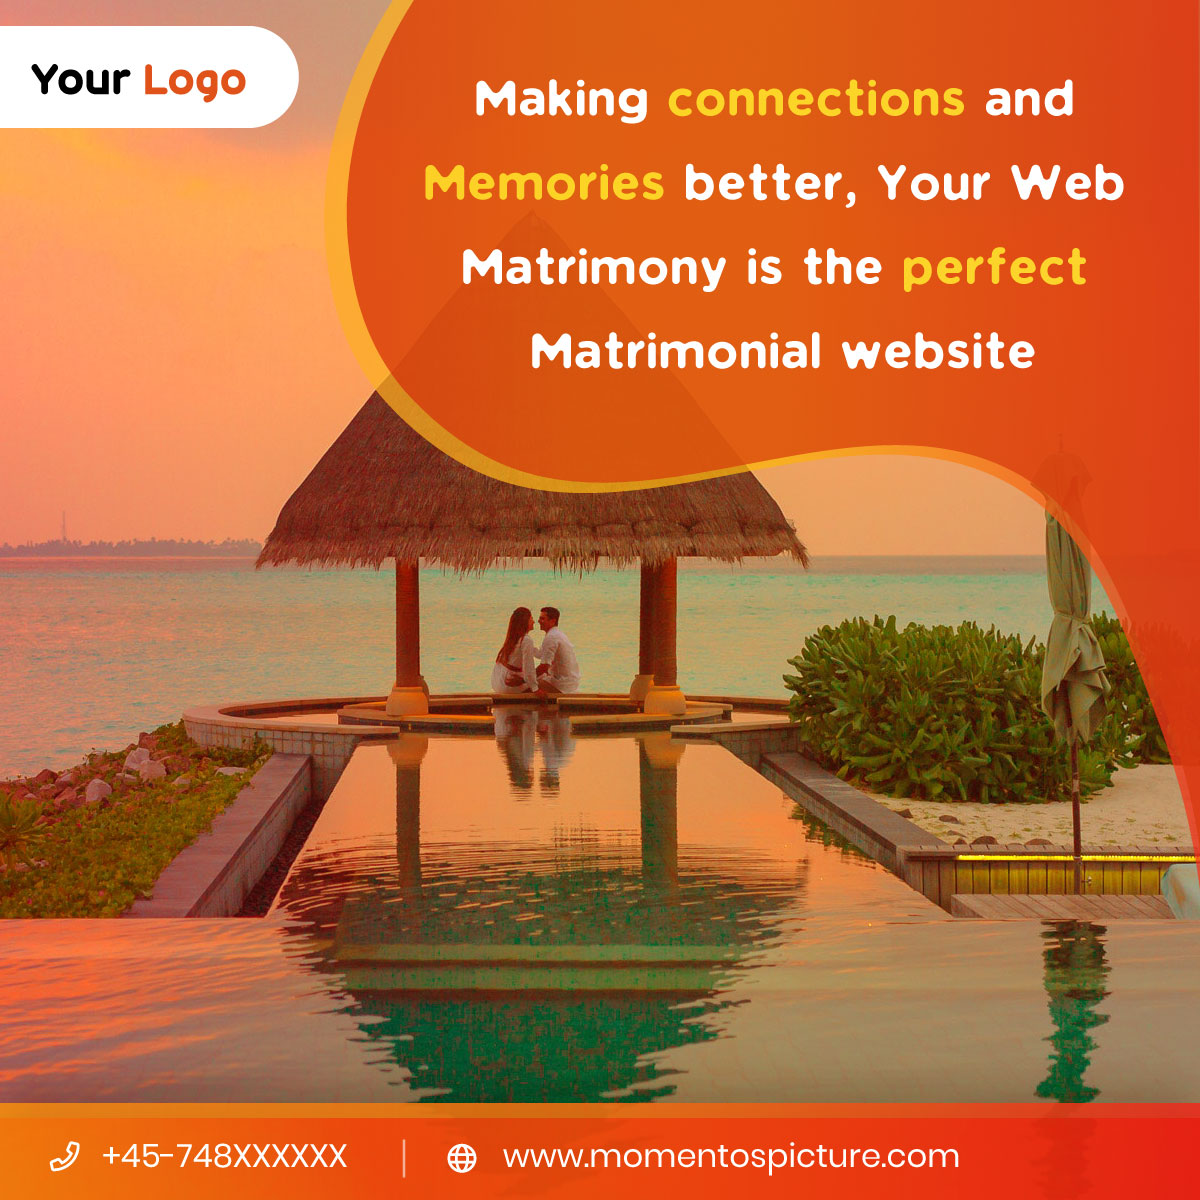 Web Matrimony